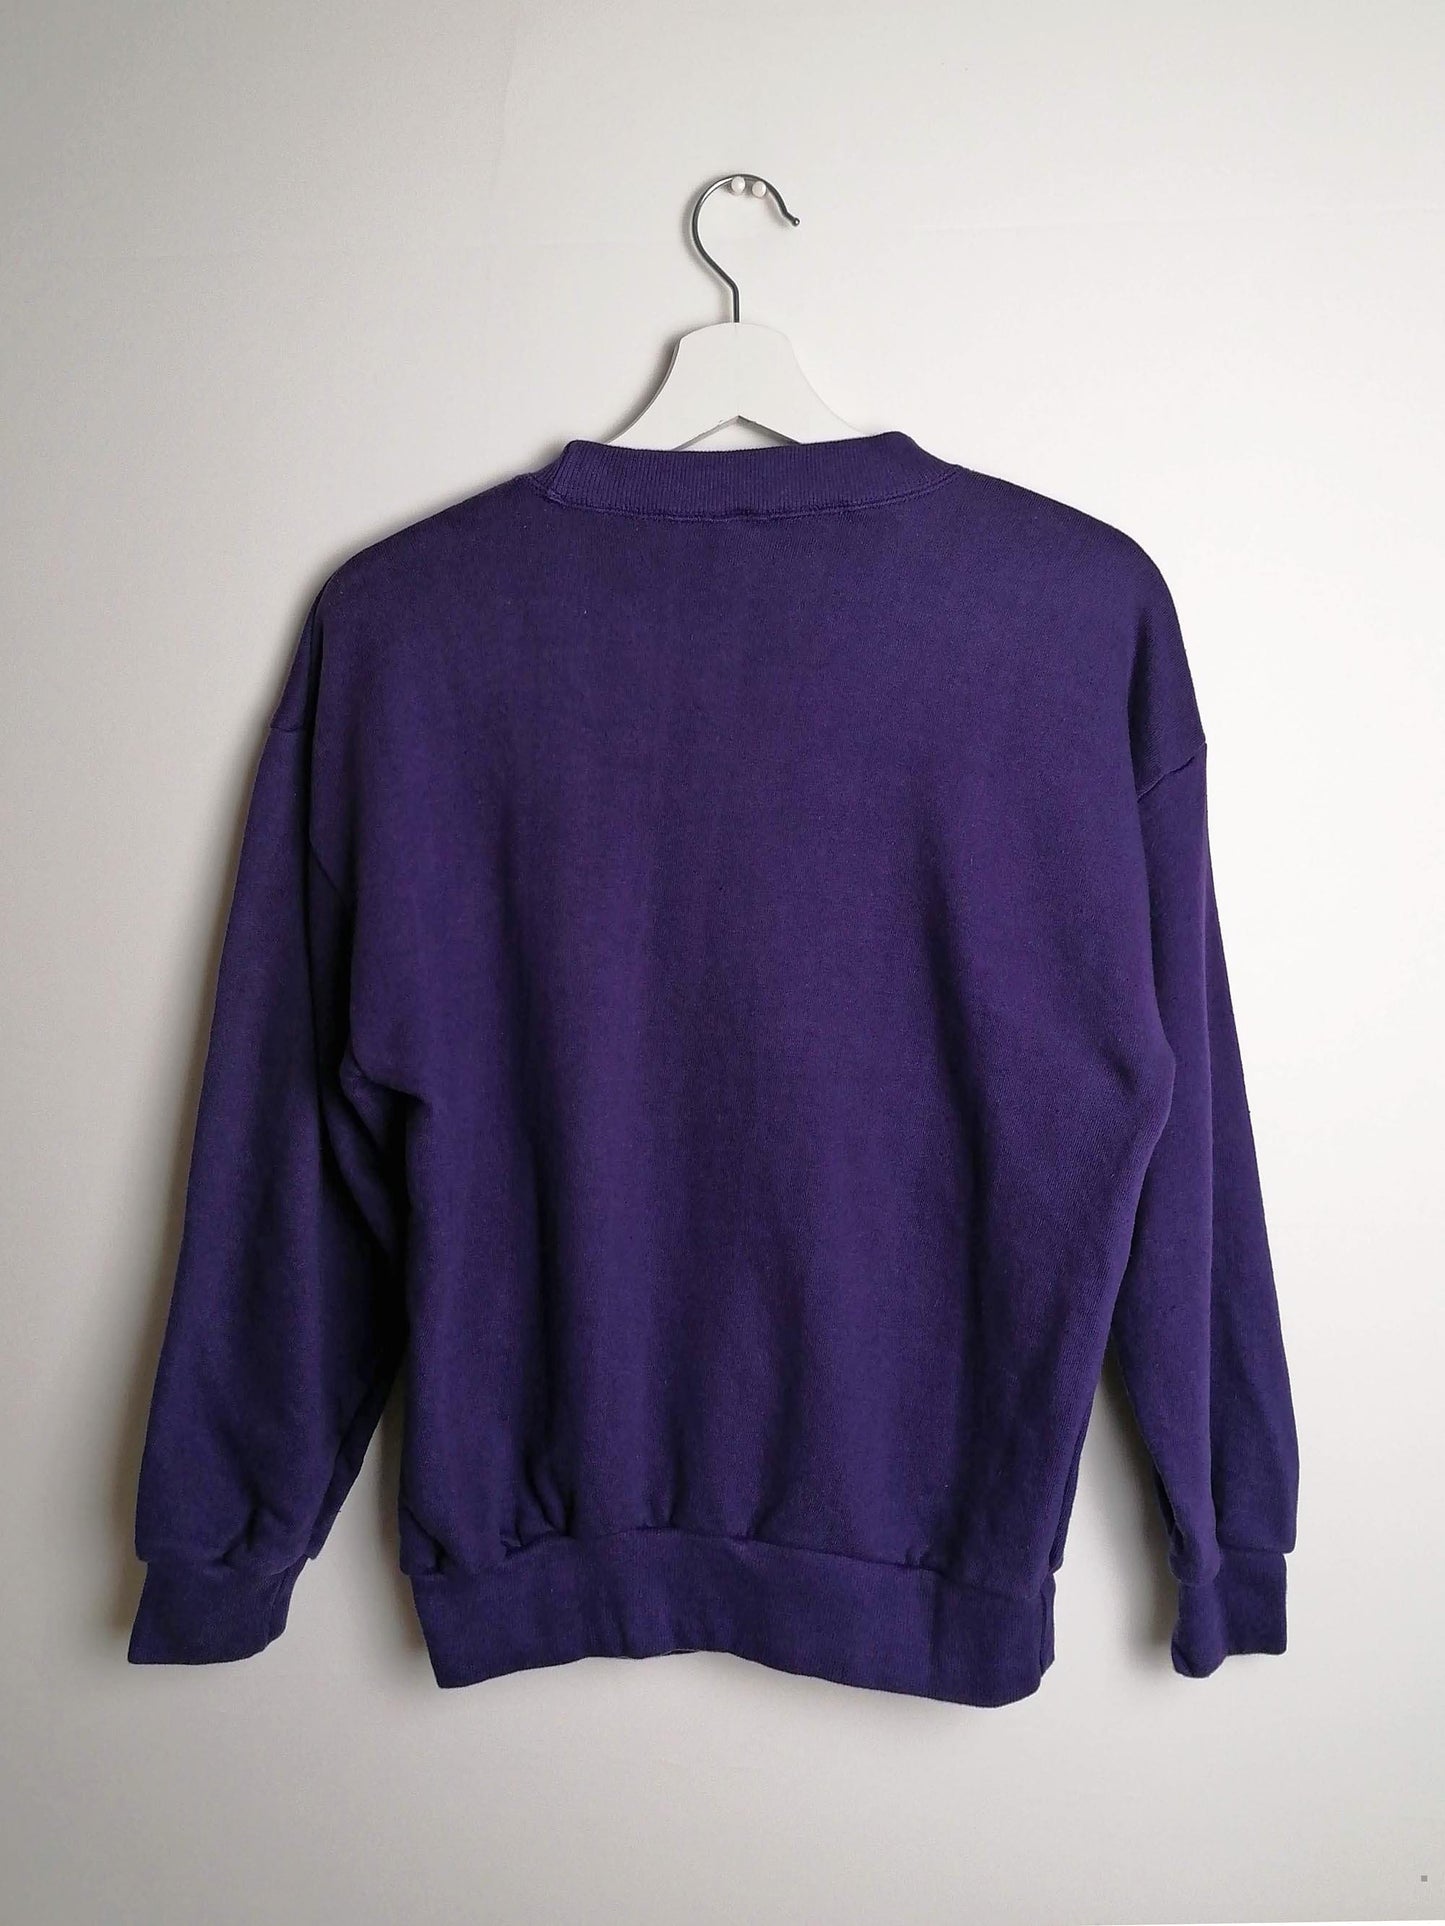 Retro Purple Sweatshirt Embroidery Flowers - size S